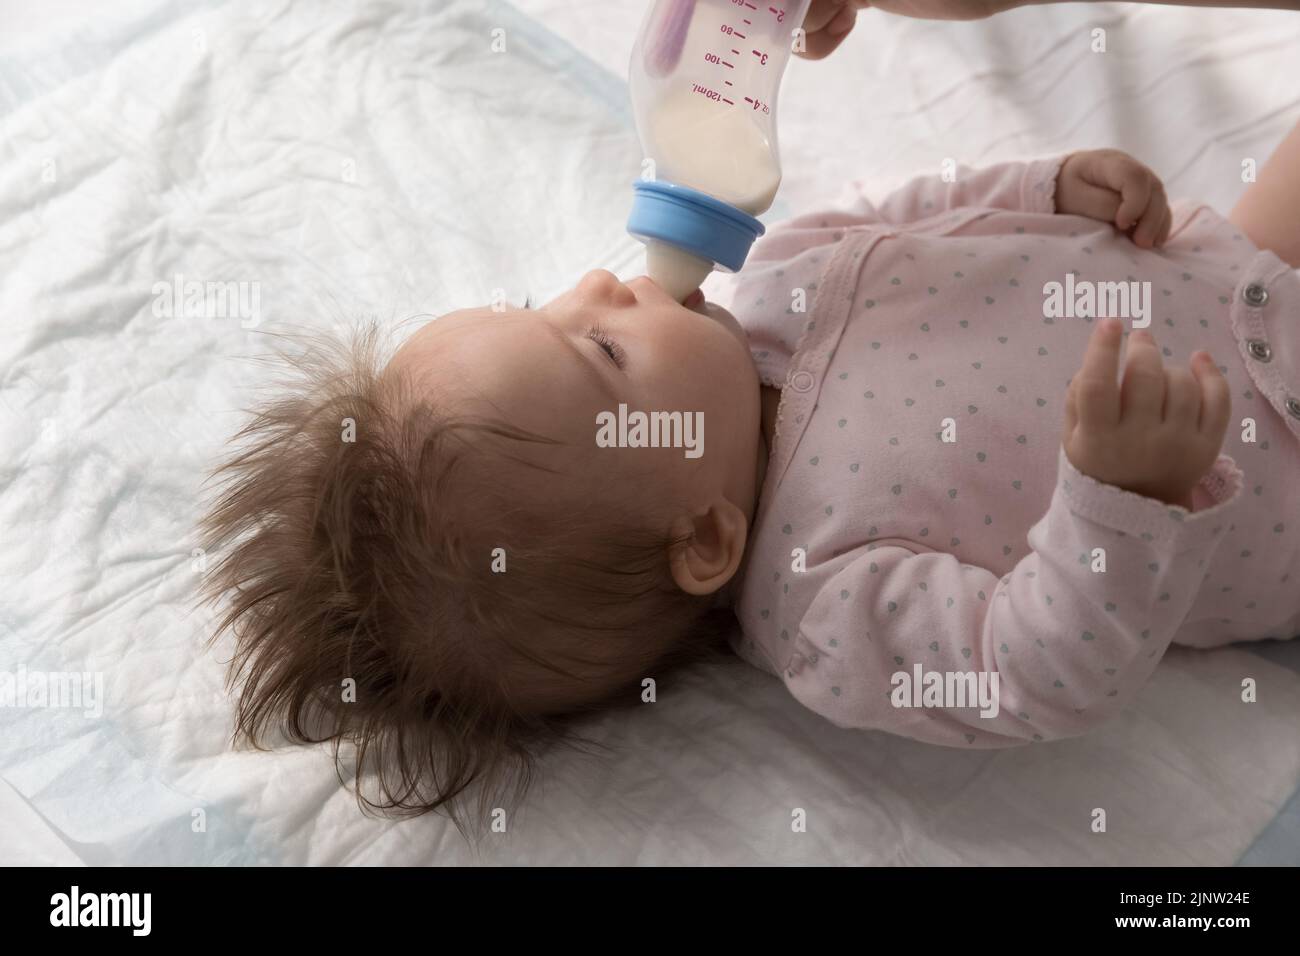 Adorable newborn baby drinks moms breast milk from bottle Stock Photo